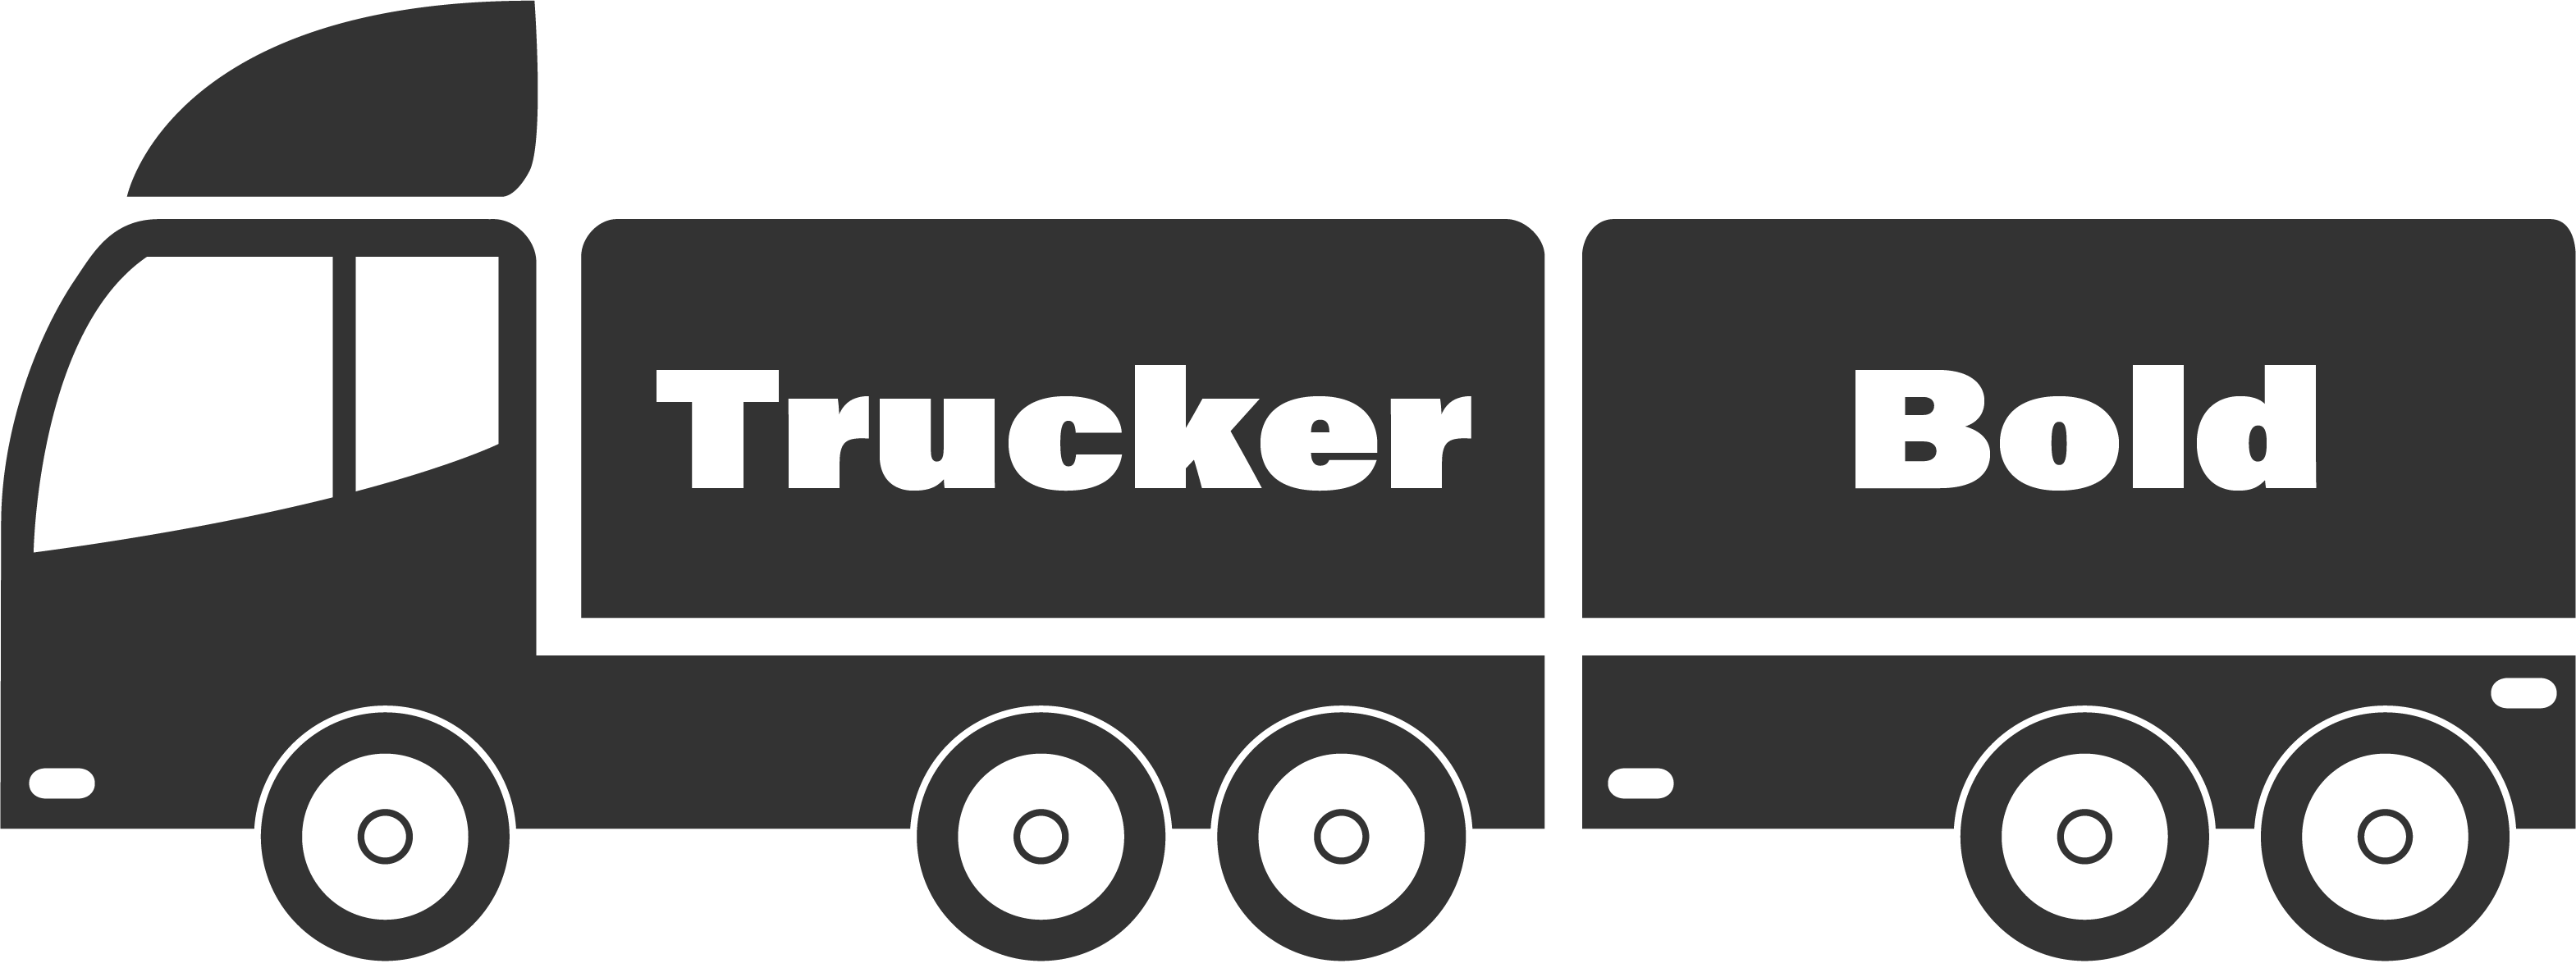 Trucker bold